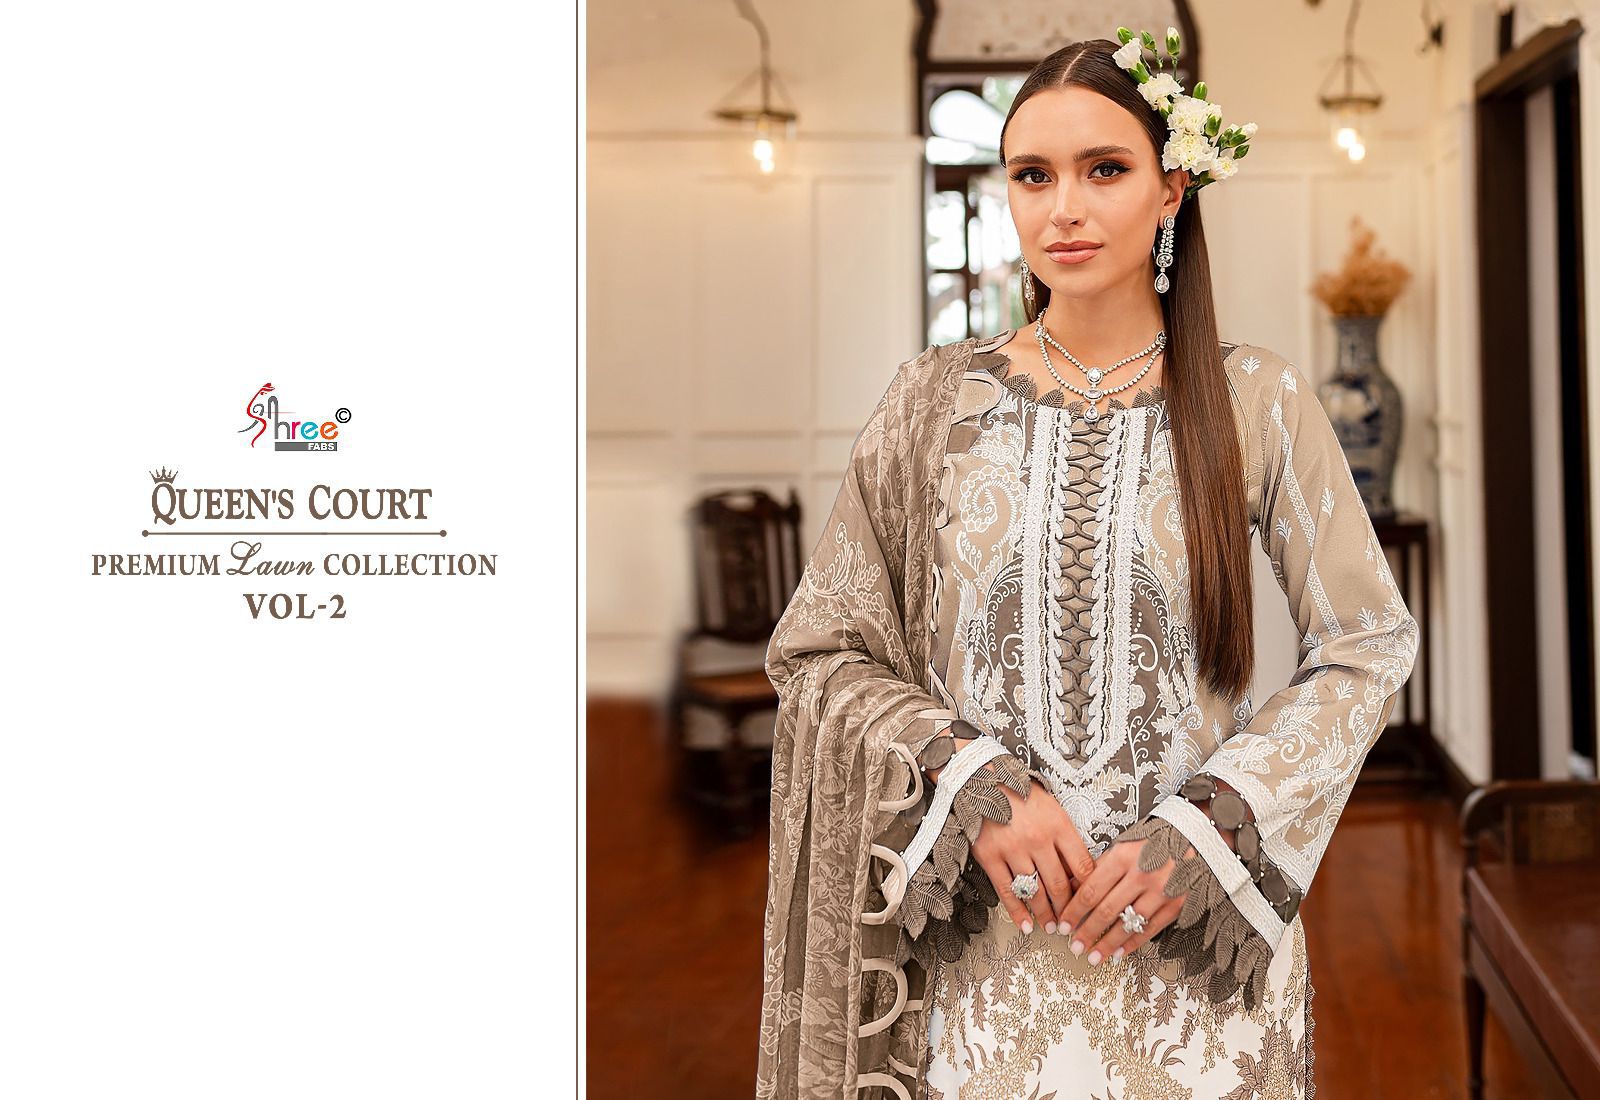 Queens Court Premium Lawn Collection Vol 2 Shree Fabs Cotton Pakistani Patch Work Suits Wholesaler India